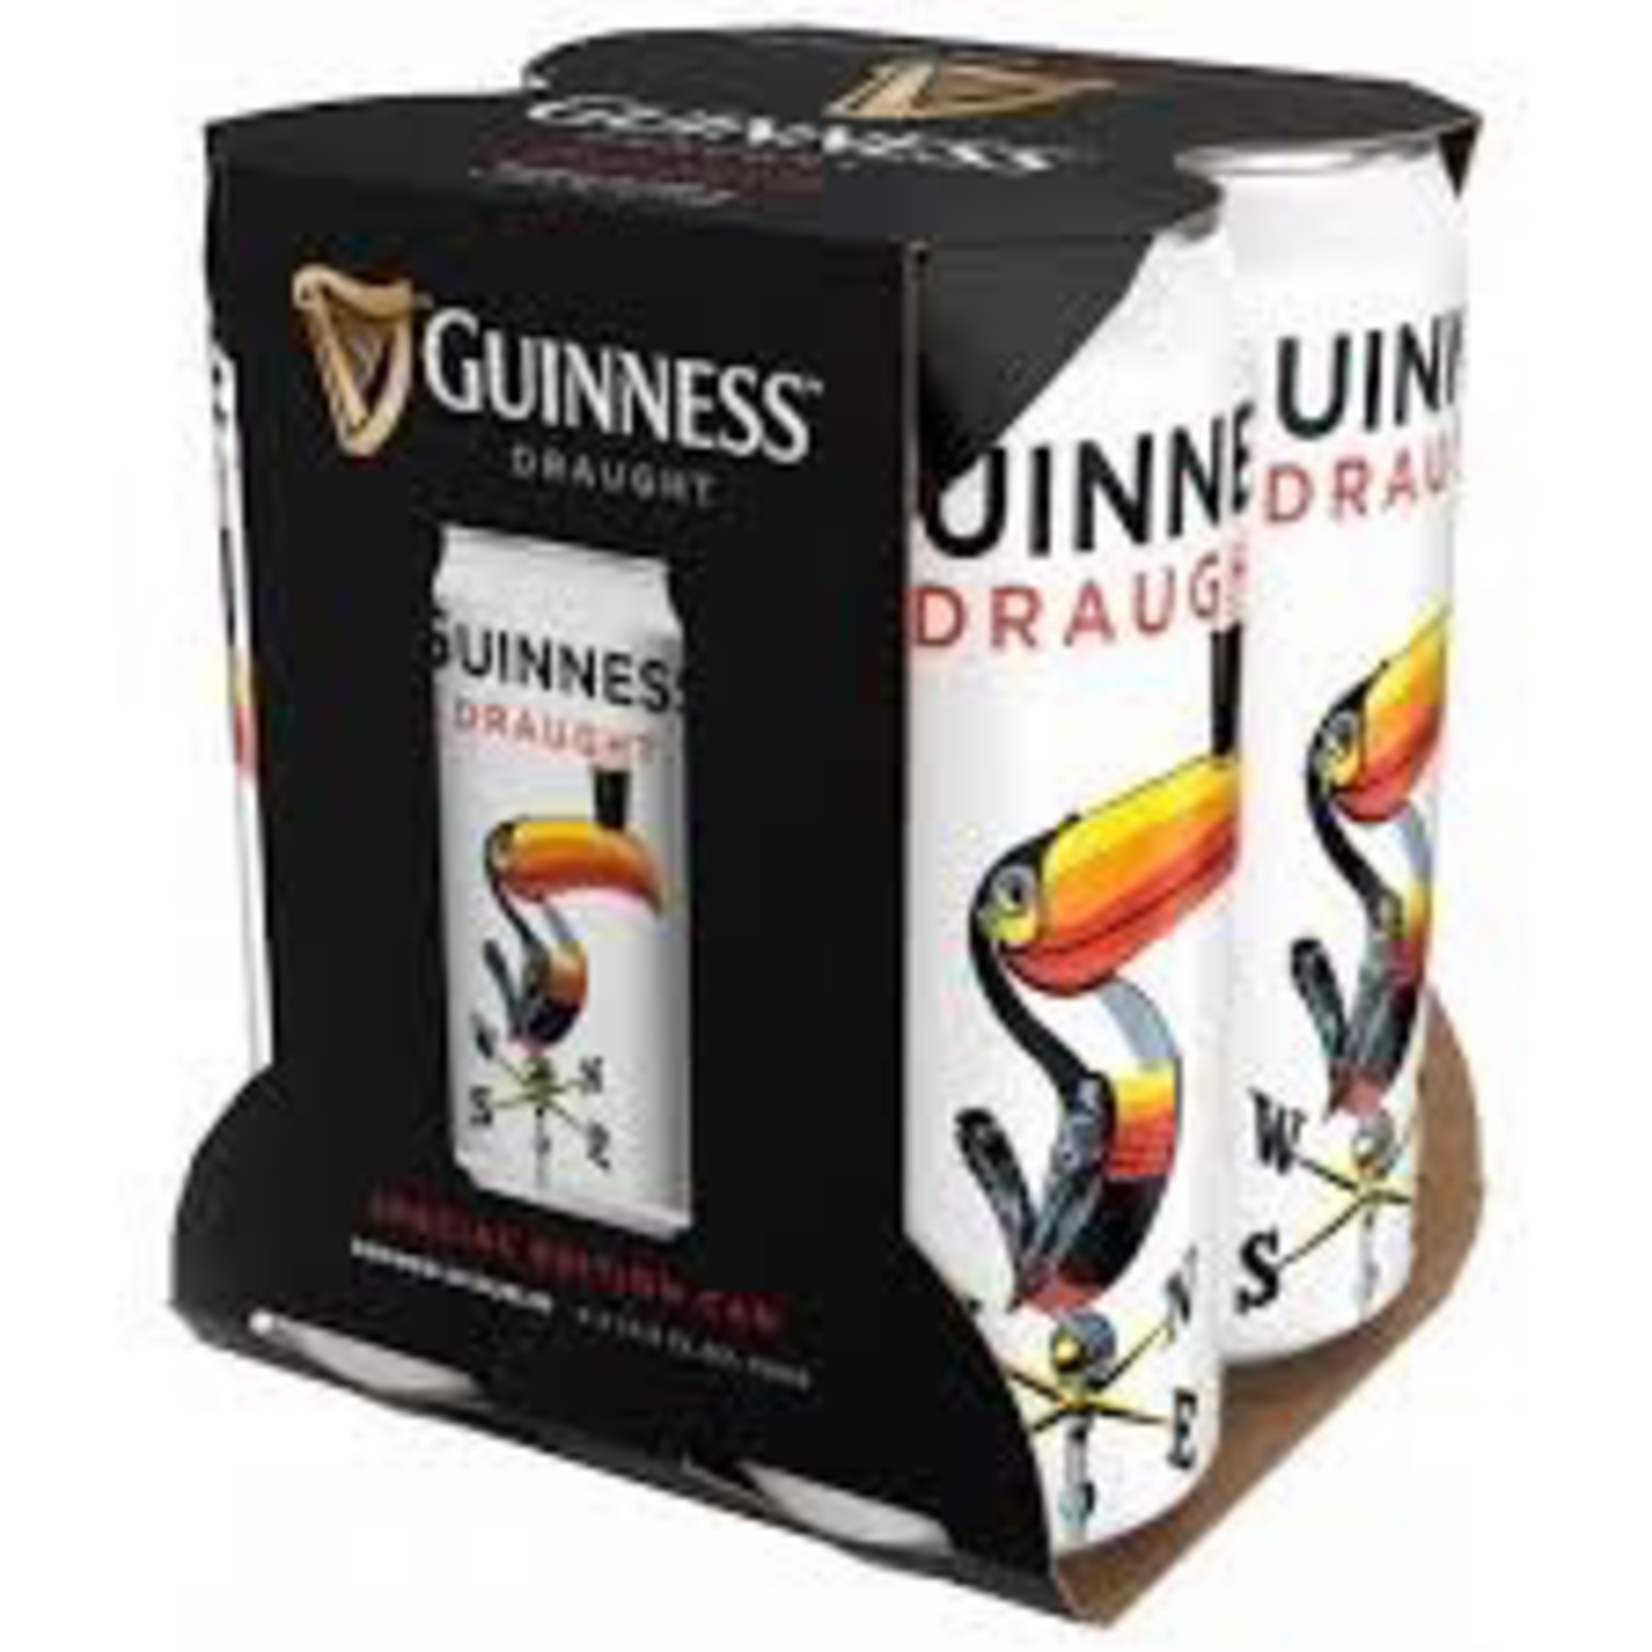 Ireland Guinness Draught Stout 4pk